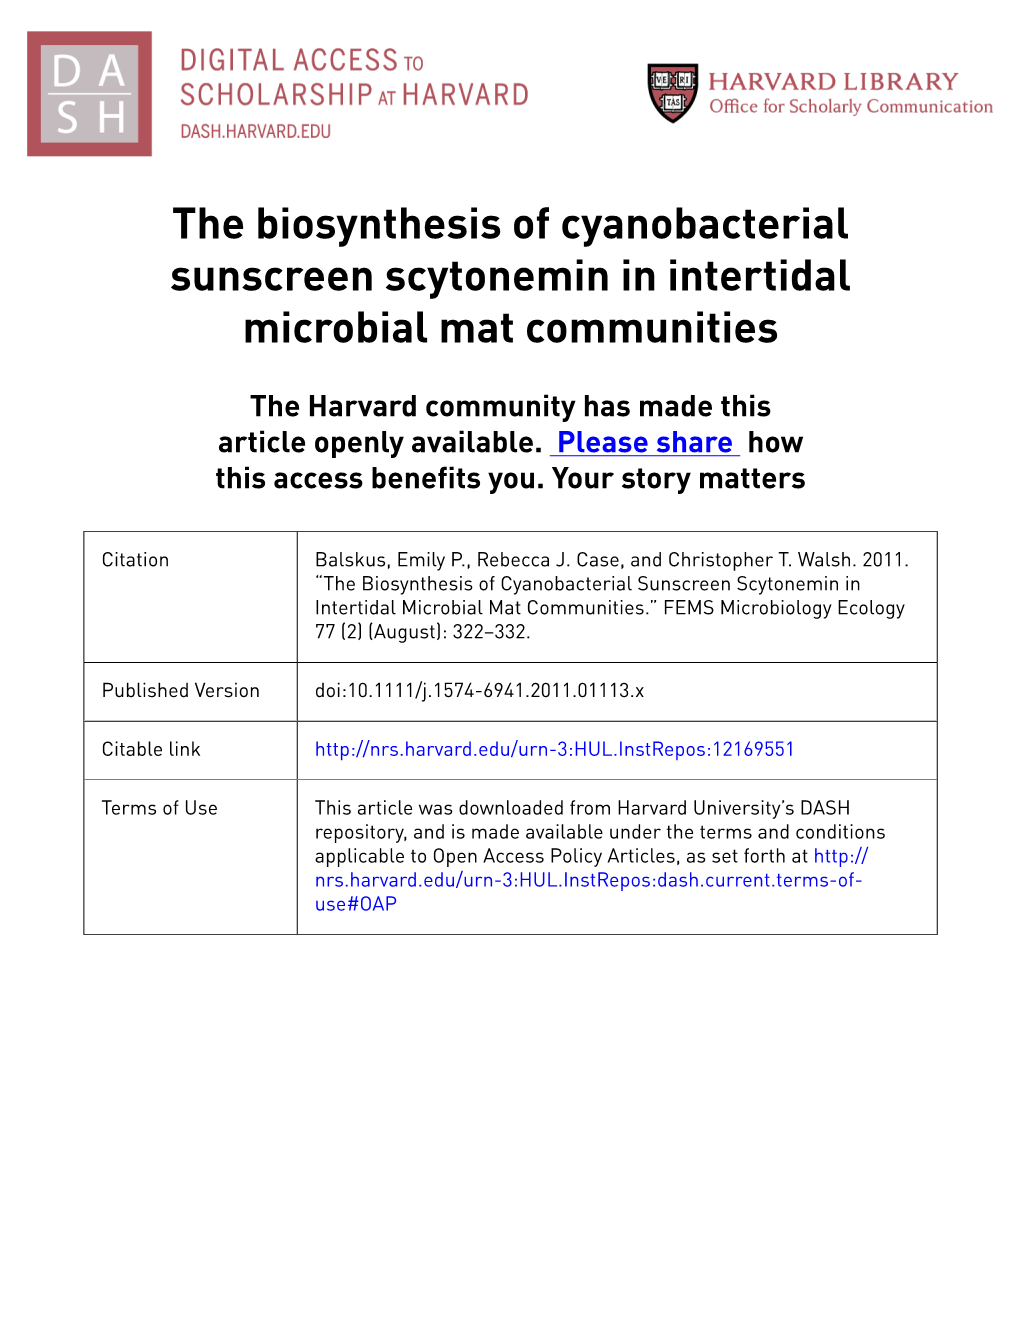 The Biosynthesis of Cyanobacterial Sunscreen Scytonemin in Intertidal Microbial Mat Communities